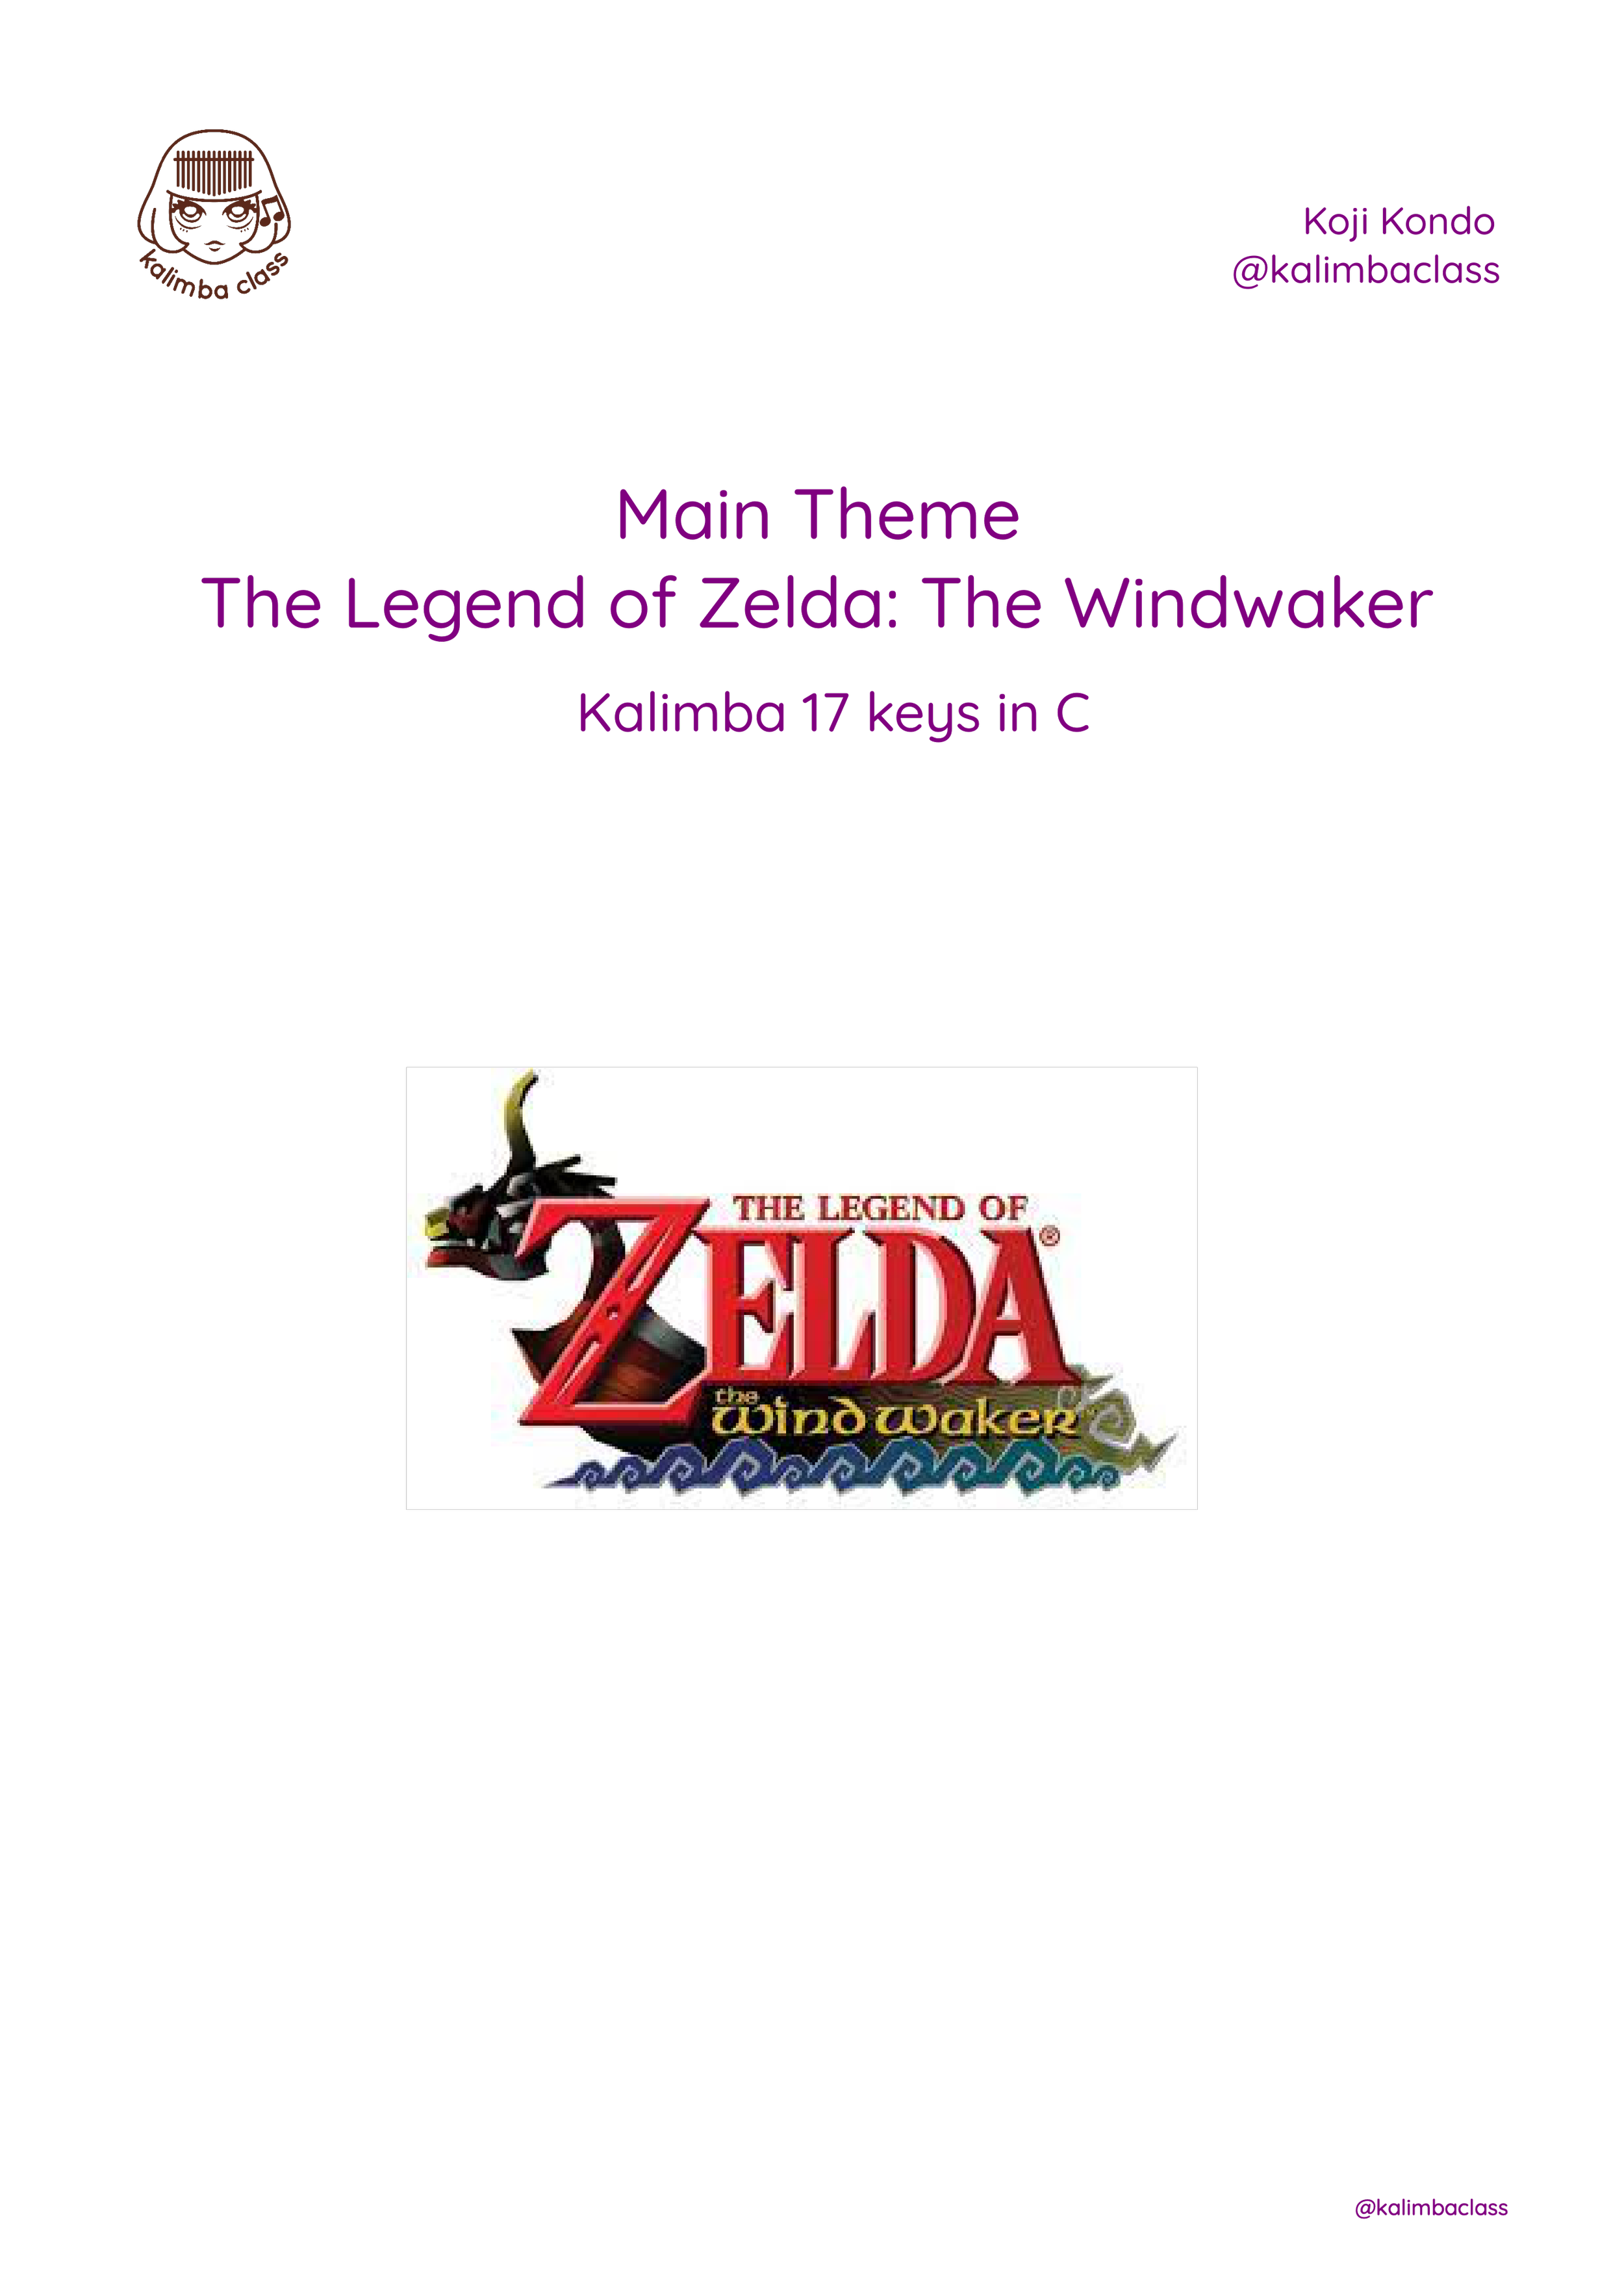 Main Theme, The Legend of Zelda: The Windwaker , Kalimba 17 keys in C.